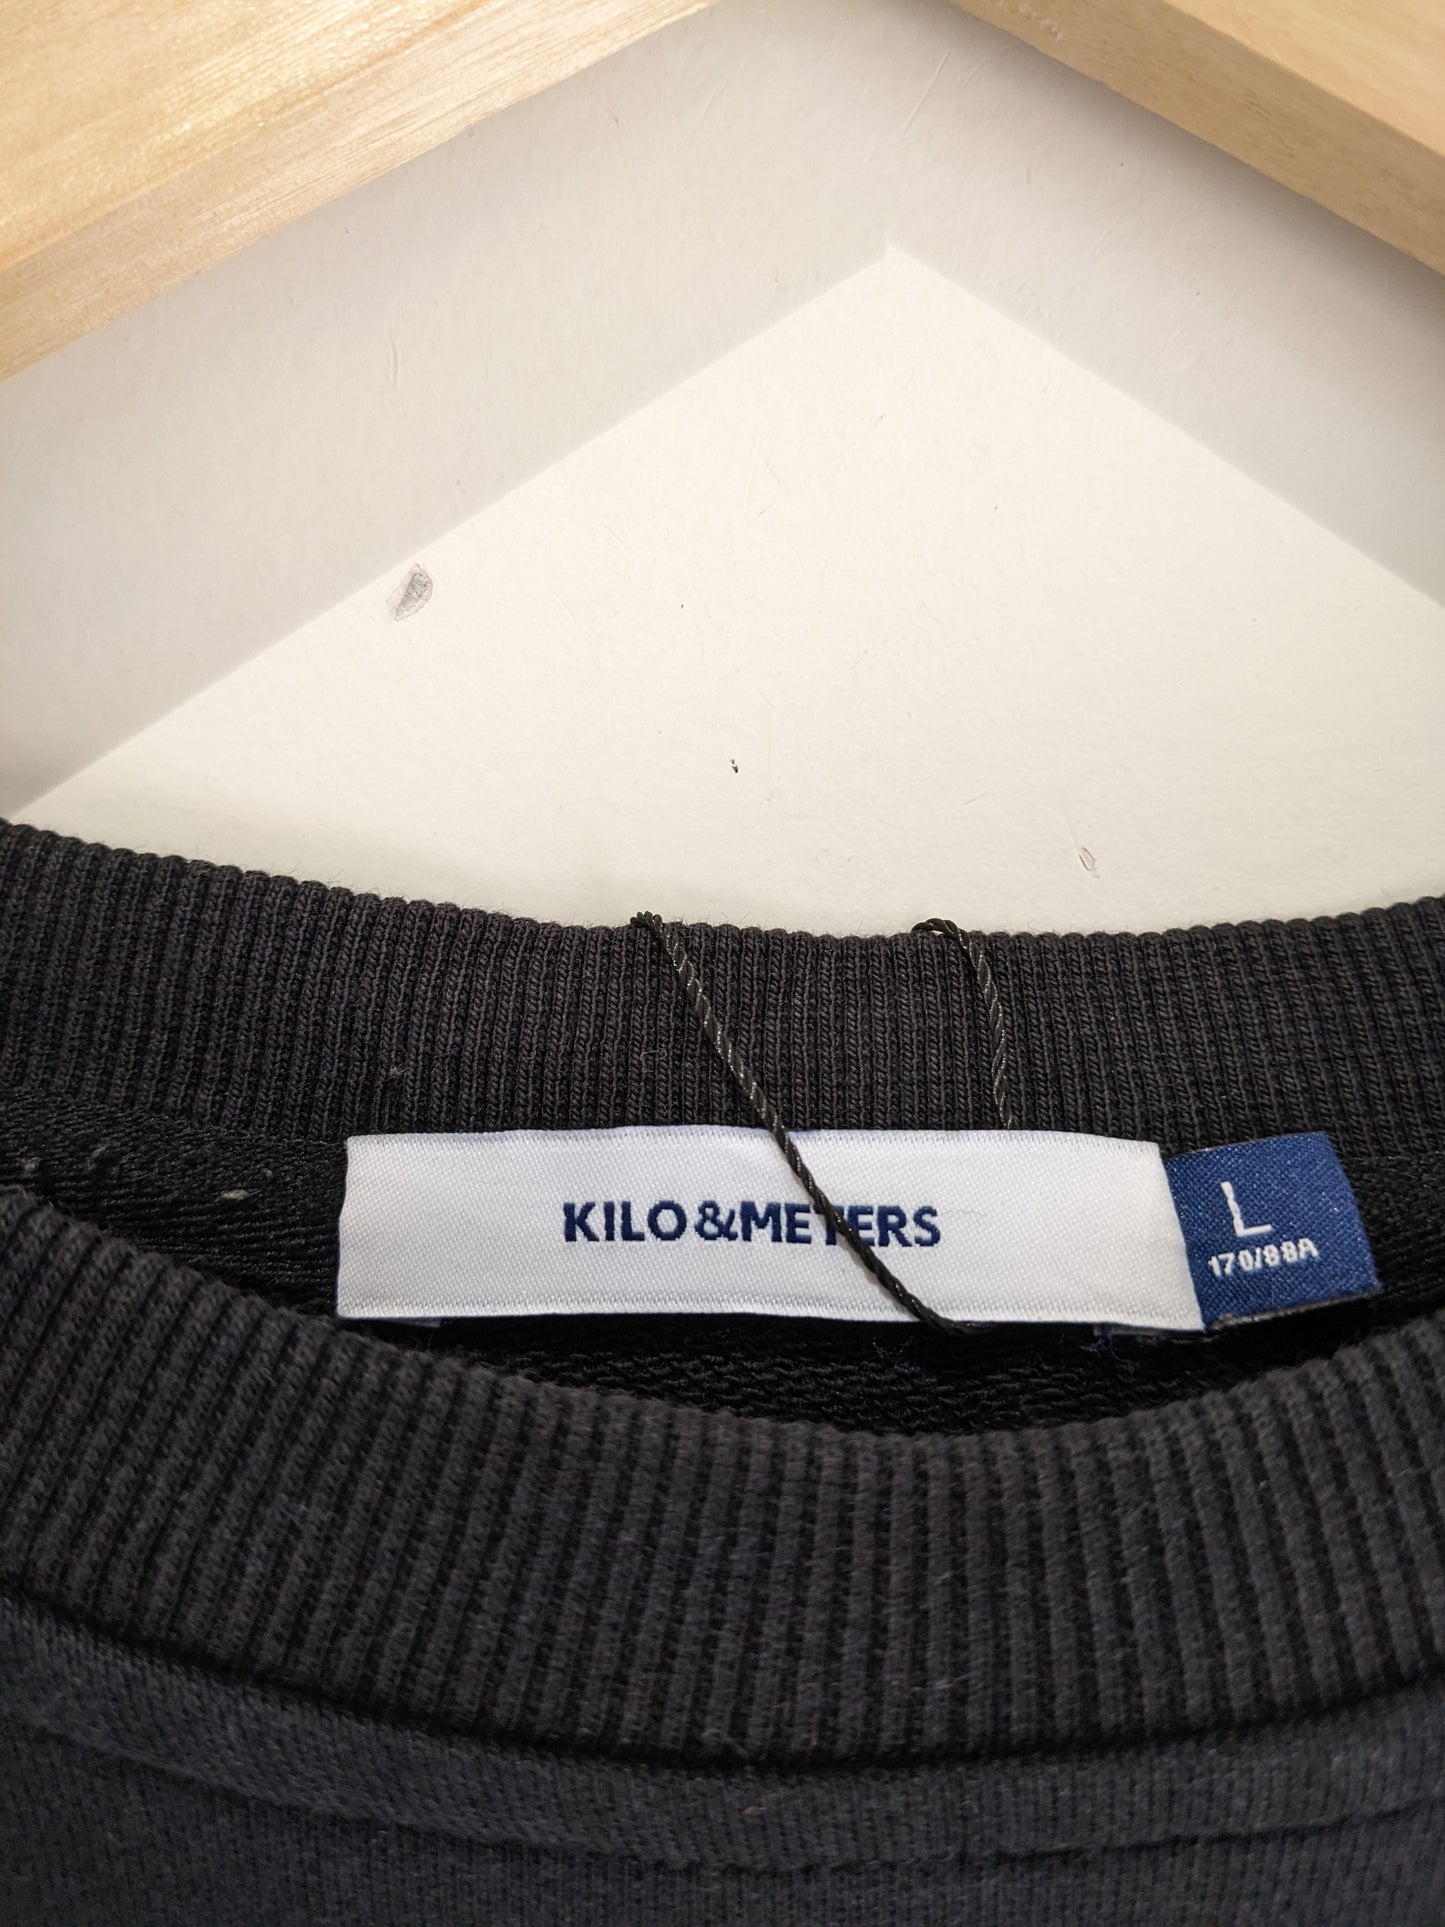 Kilo & Meters Indfoying Black Sweatshirt